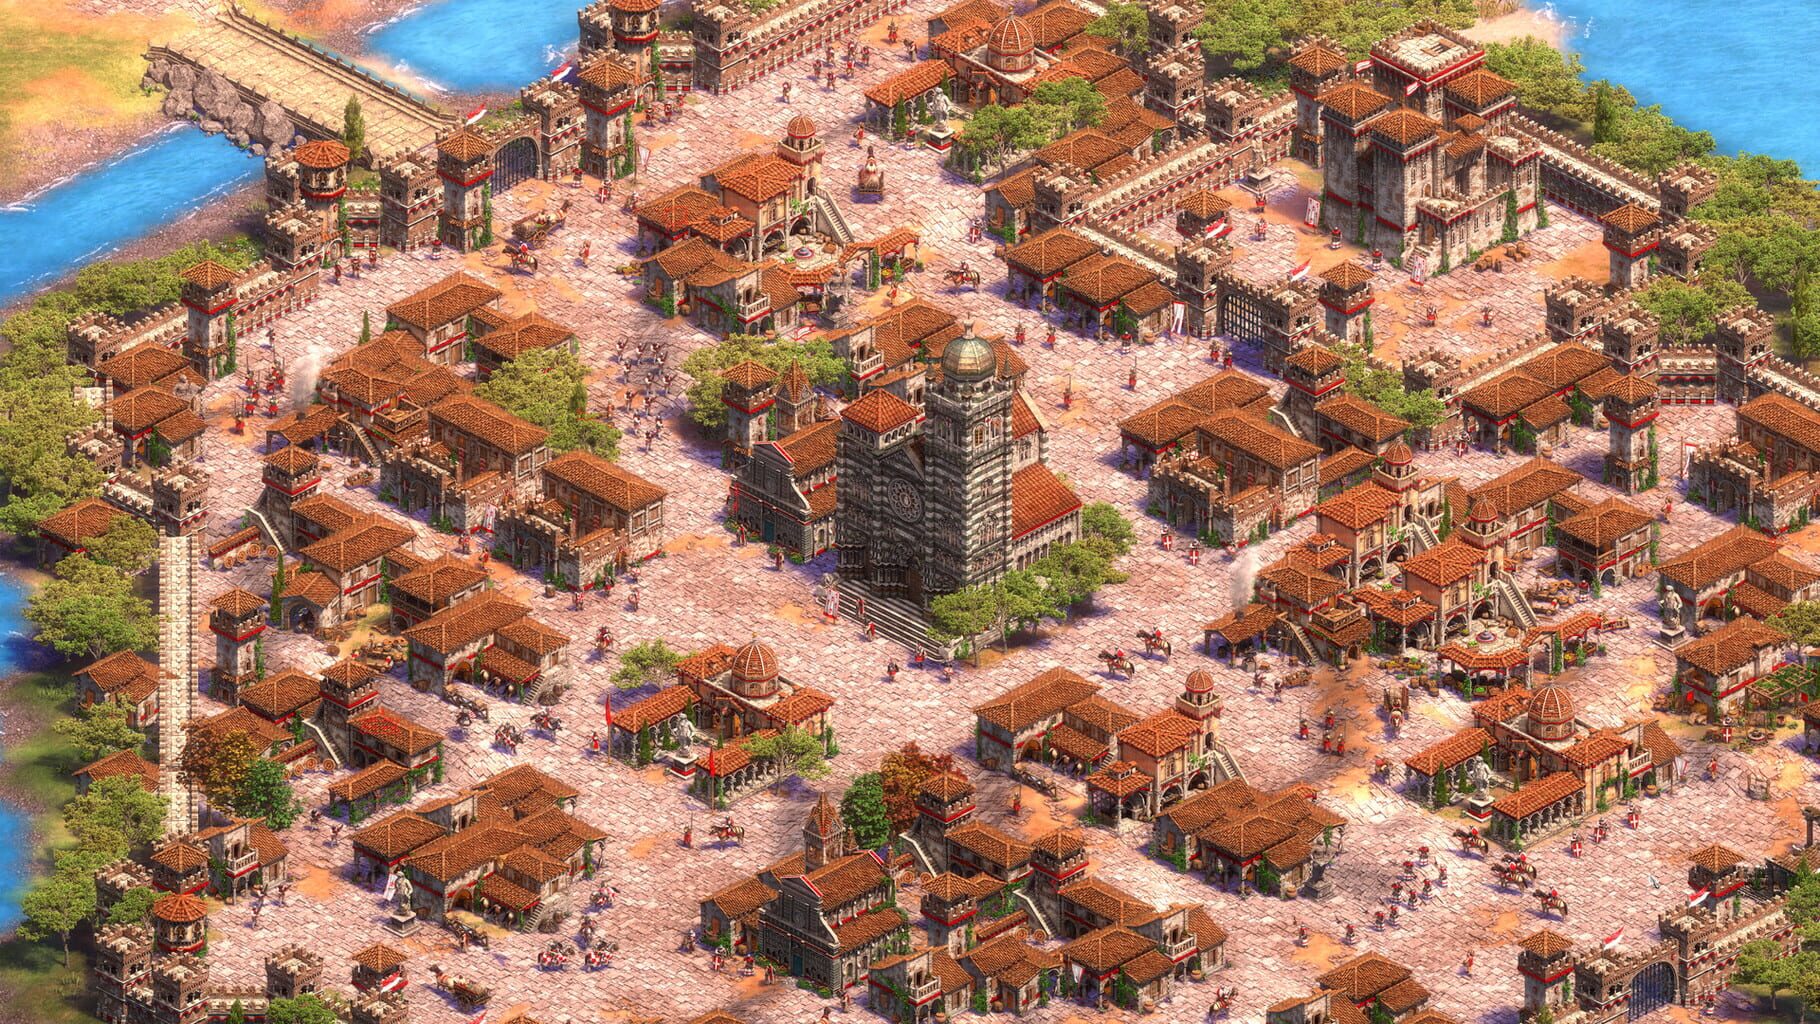 Age of Empires II screenshots